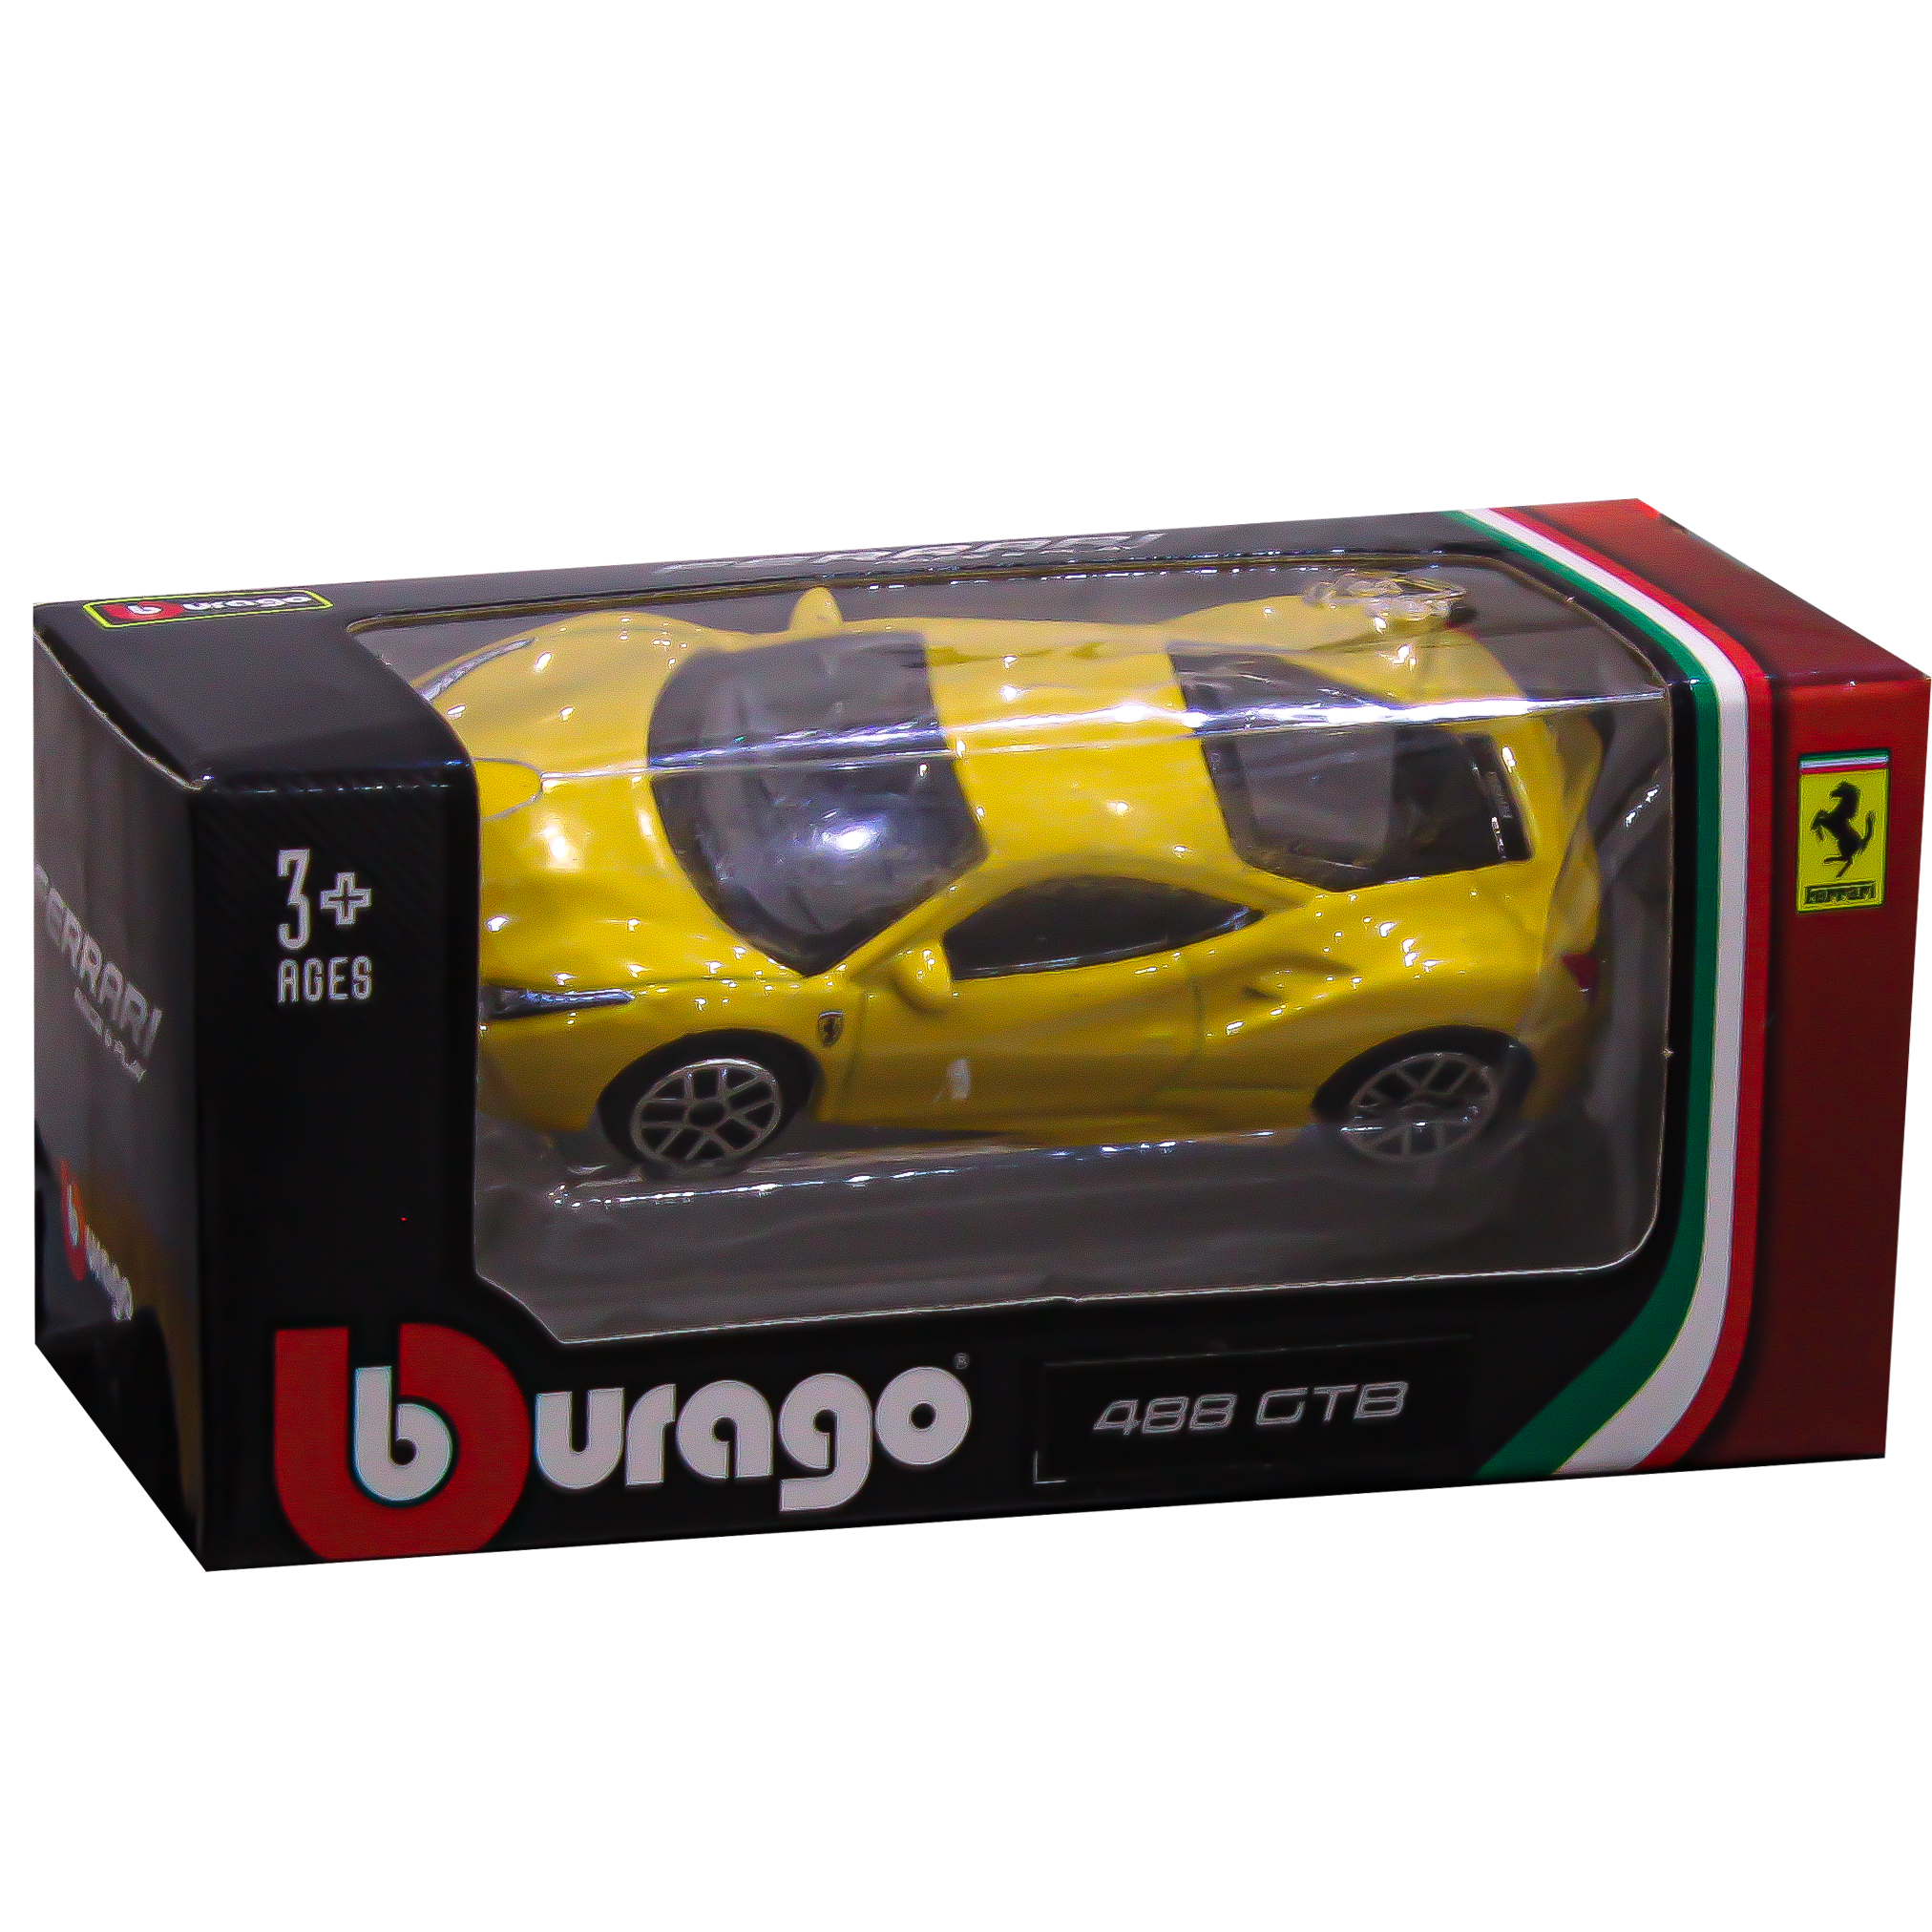 Burago Ferrari Race & Play Car - 488 GTB Yellow